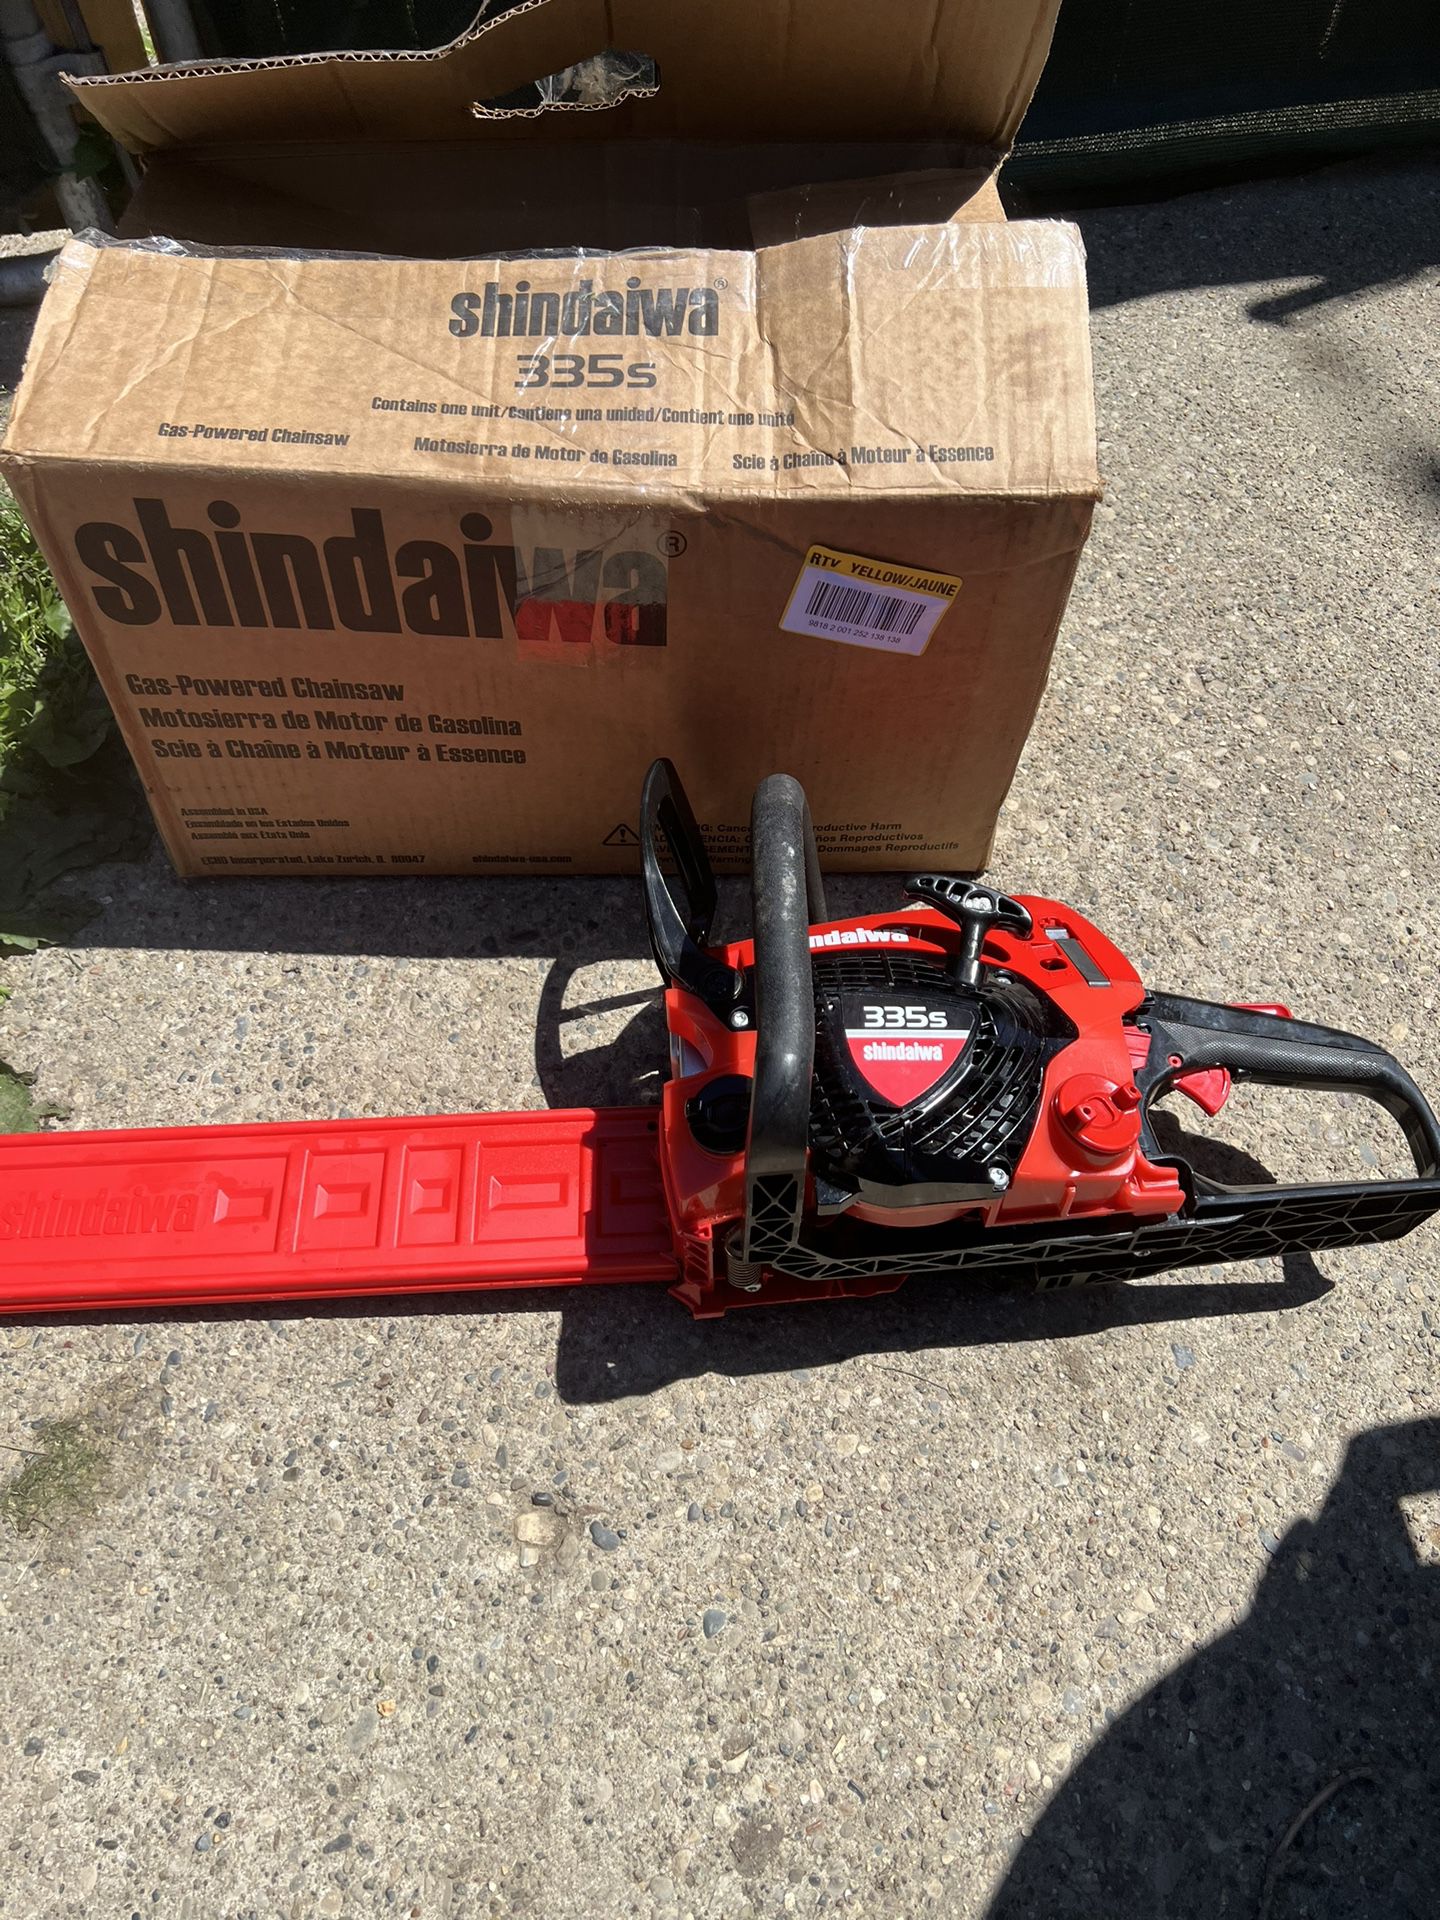 Open Box/Like New Shindaiwa 335s 34.4cc 2 Cycle Gas 16” Chainsaw Rear Handle Chain Saw